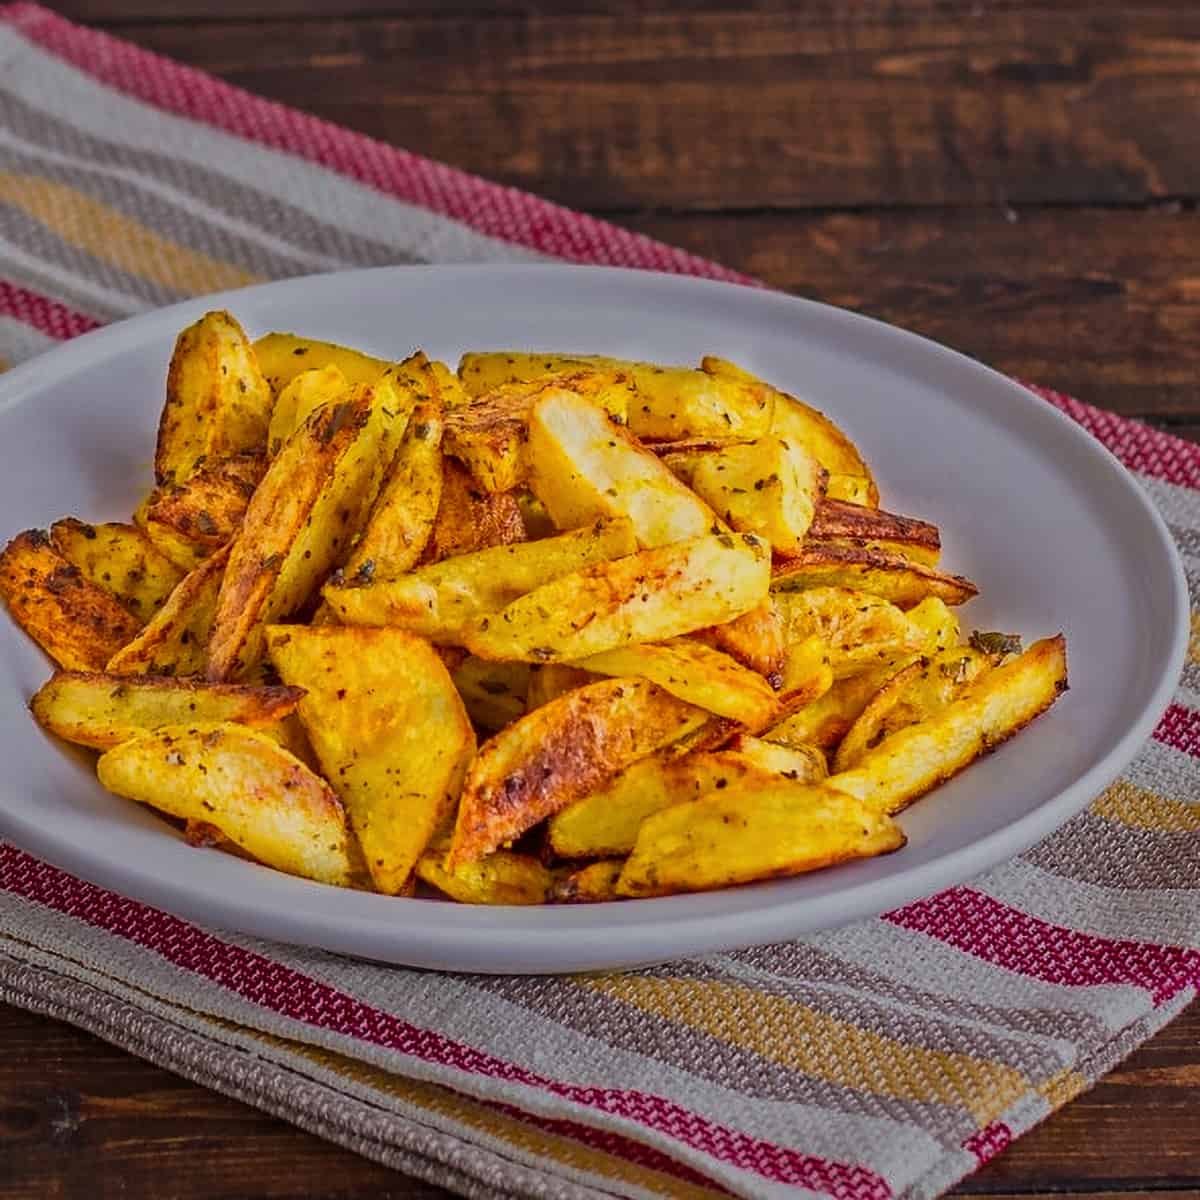 24. Crispy Indian Spiced Potato Wedges